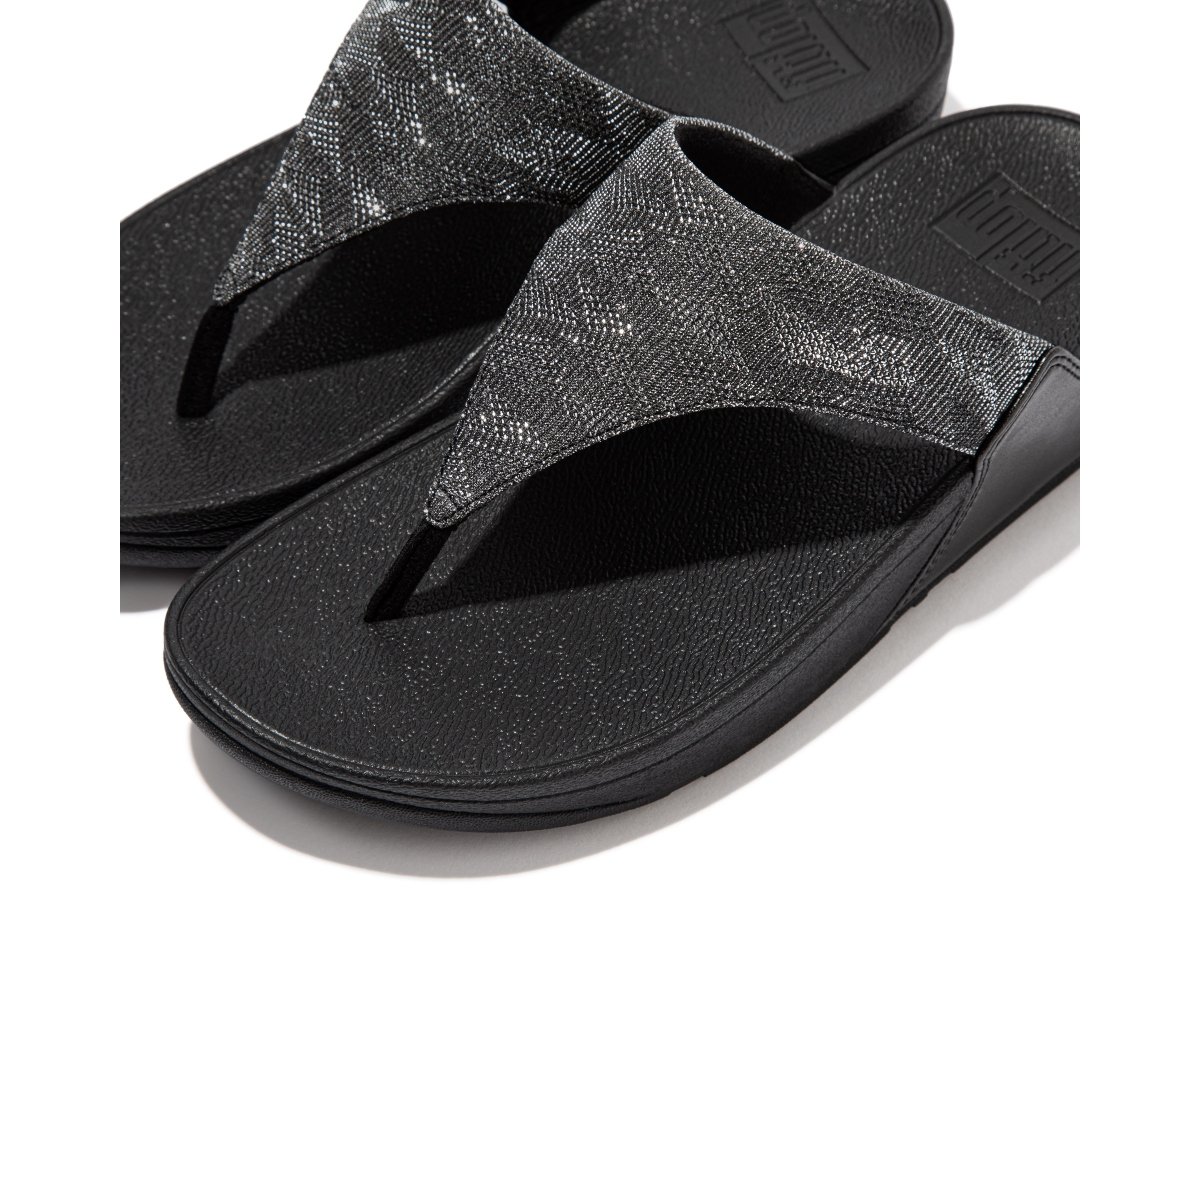 FitFlop LULU Glitz Toe-Post Sandals All Black close up